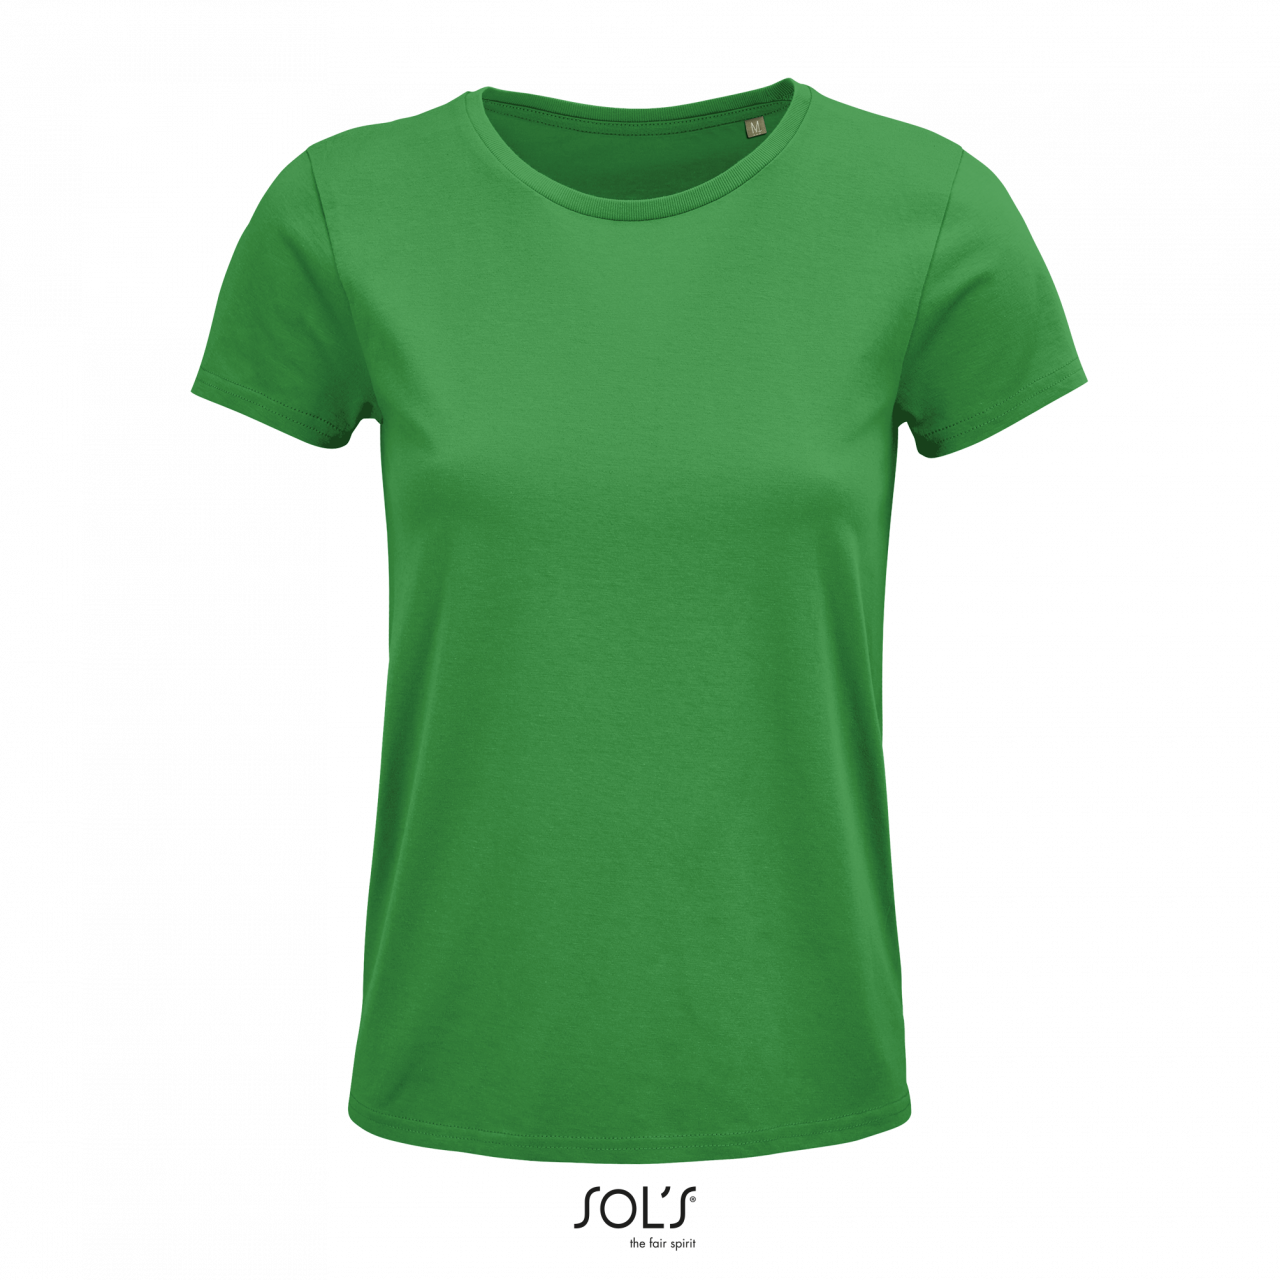 Sol's Crusader Women - Round-neck Fitted Jersey T-shirt - Sol's Crusader Women - Round-neck Fitted Jersey T-shirt - Irish Green